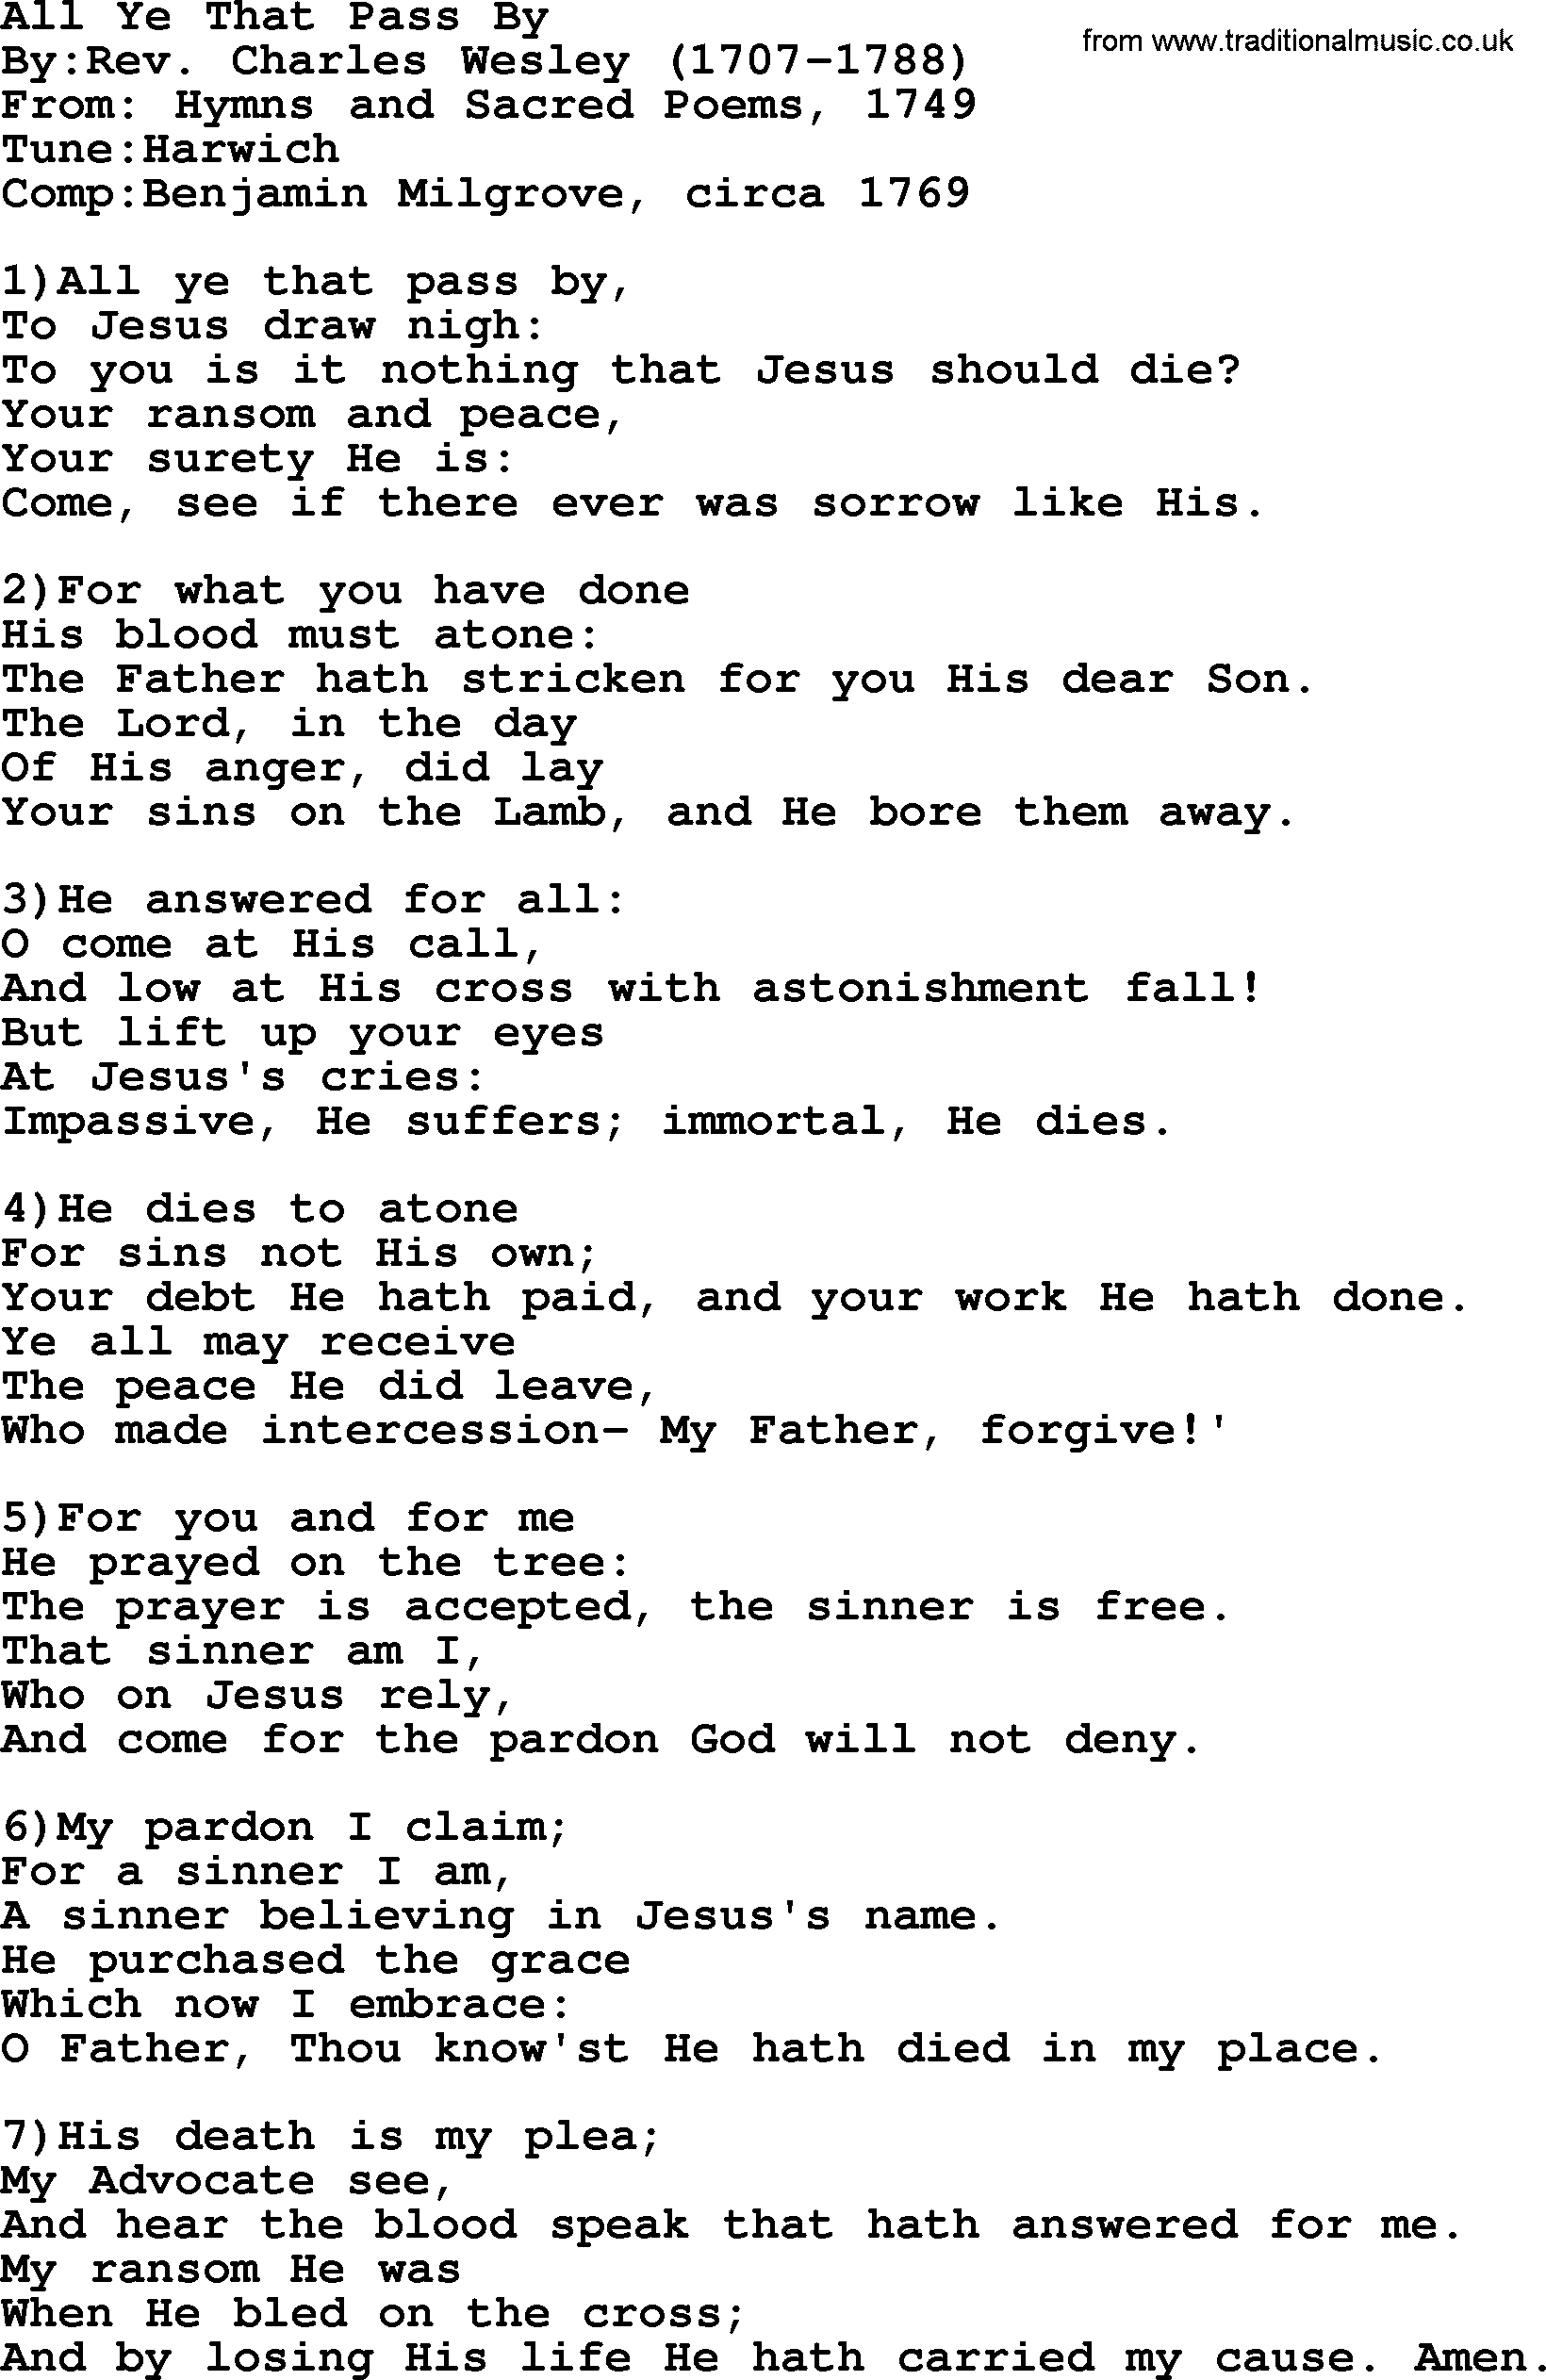 Methodist Hymn: All Ye That Pass By, lyrics